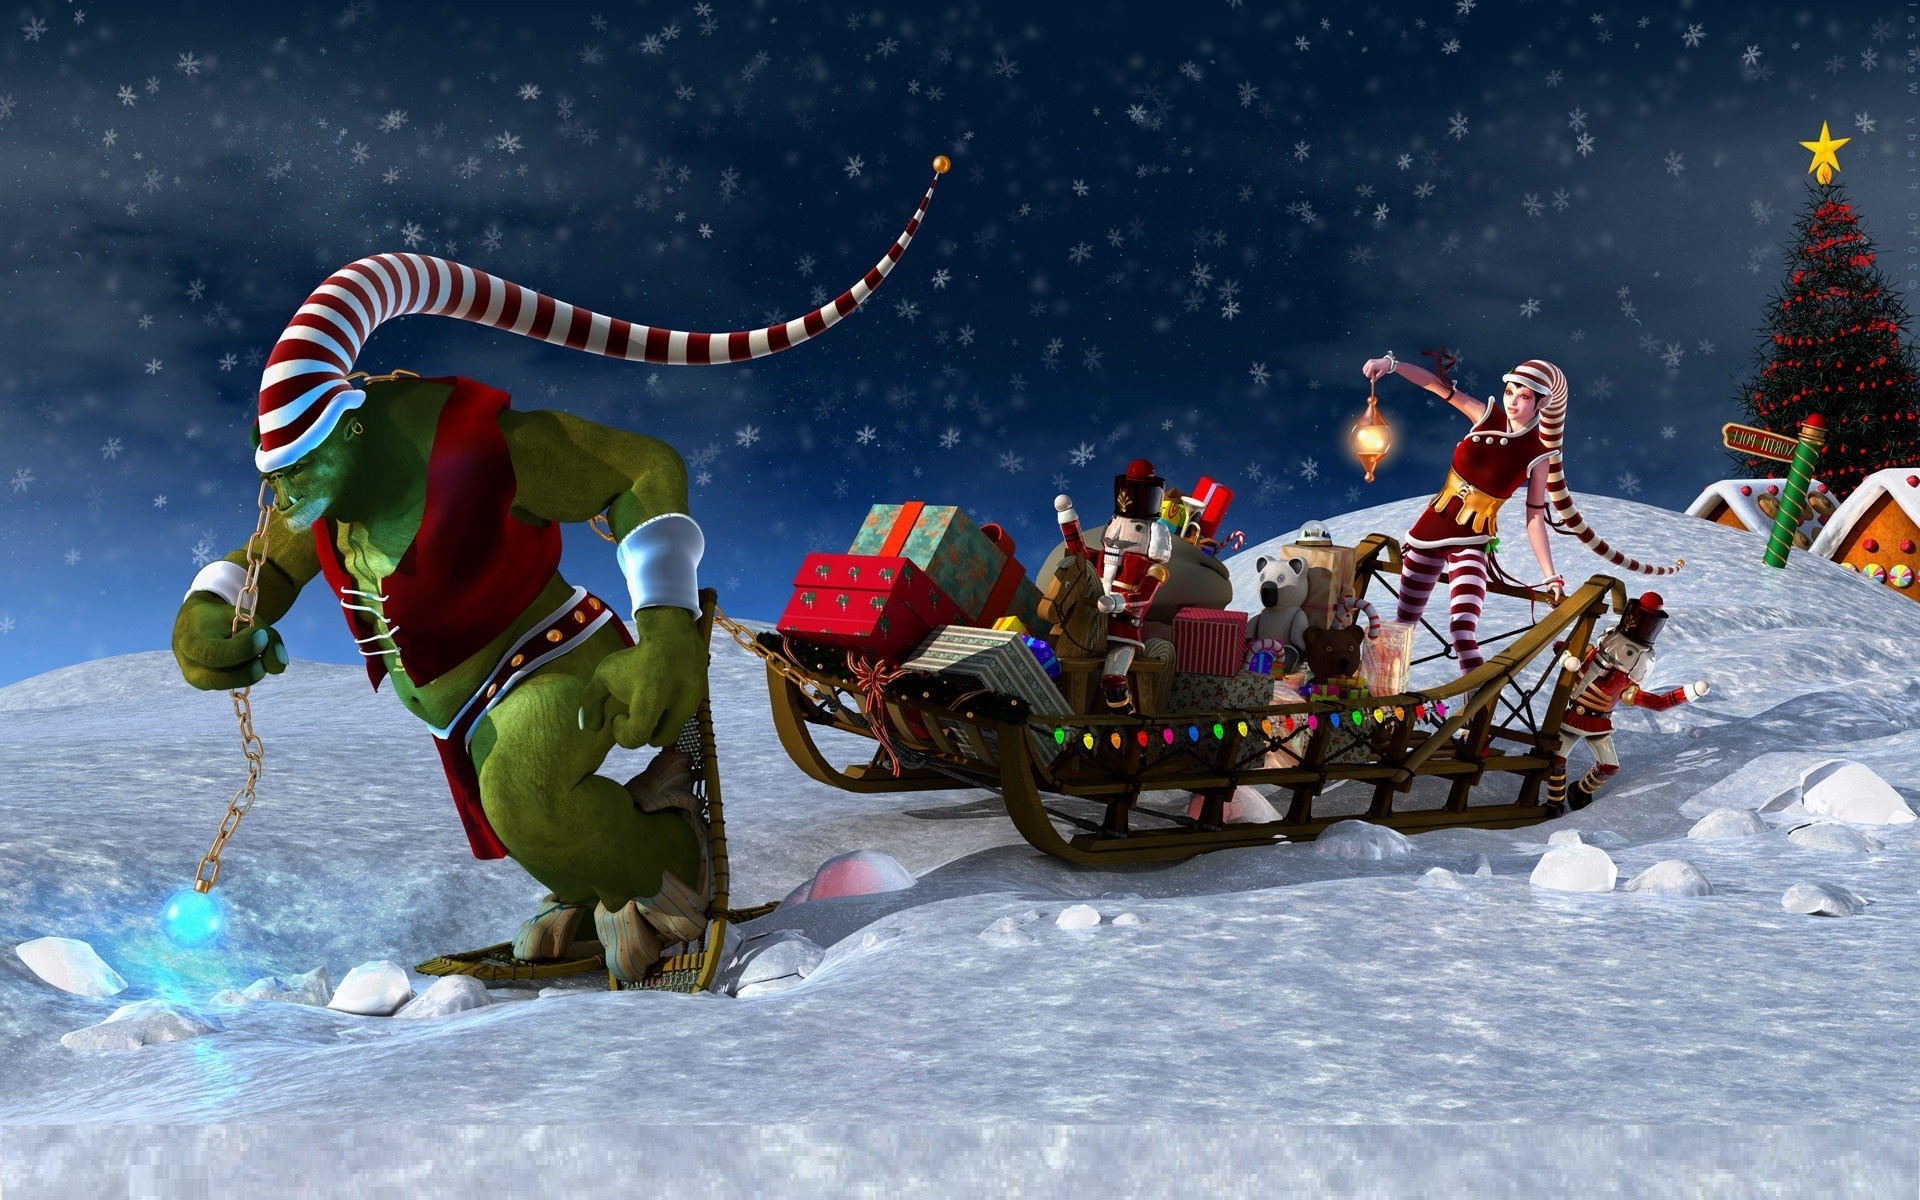 1920x1200 Animated Christmas Backgrounds For Desktop For Desktop